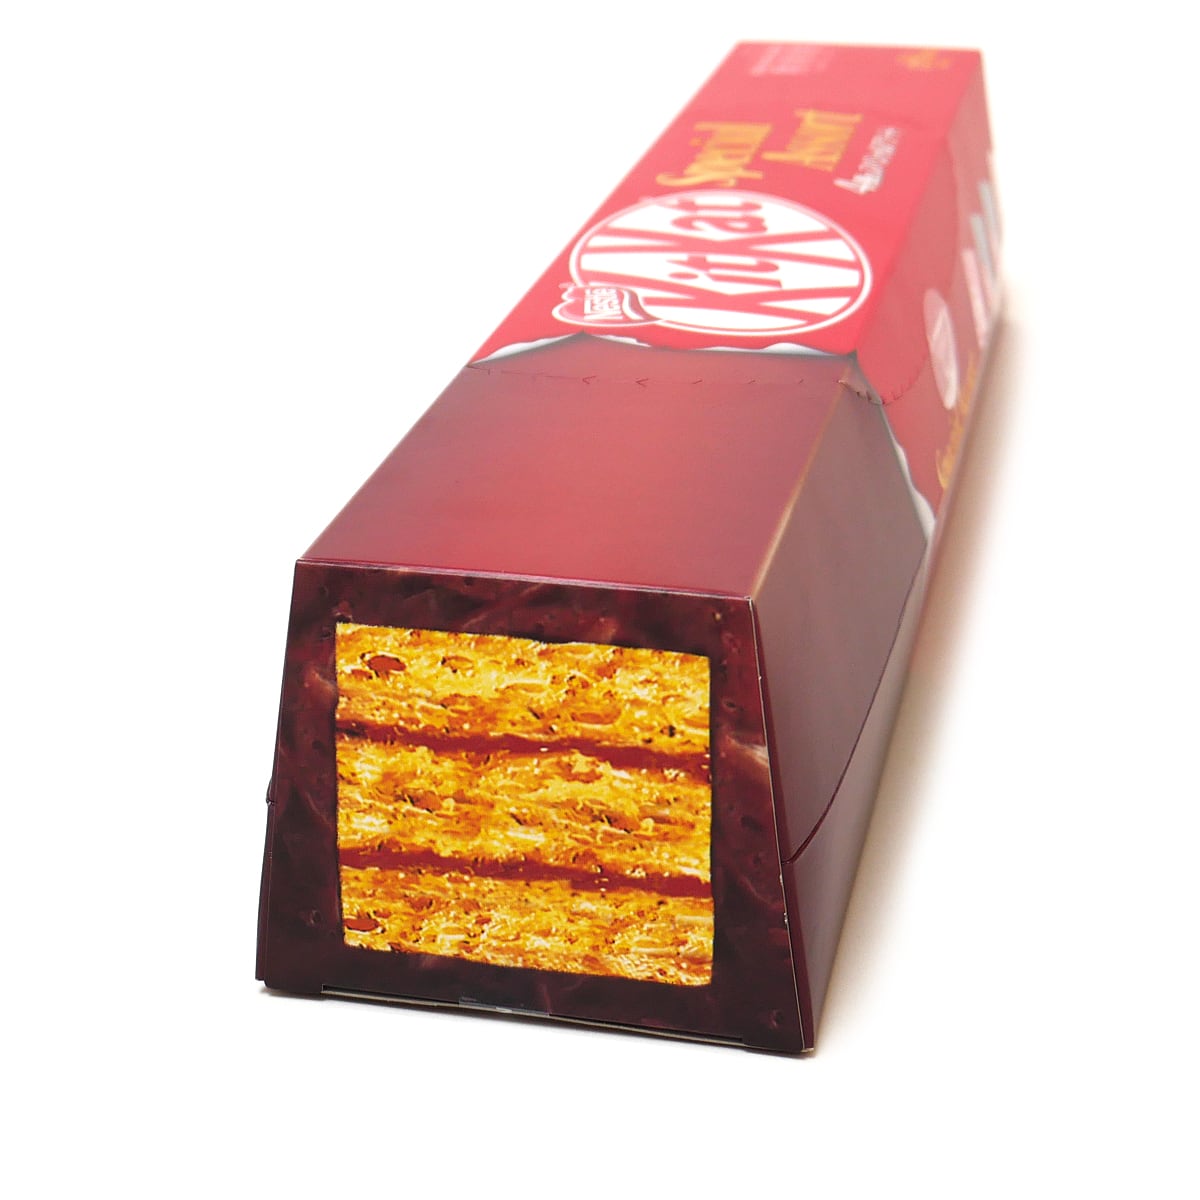 Nestle Kit Kat Special Assortment 5 different flavors 51pcs – WAFUU JAPAN